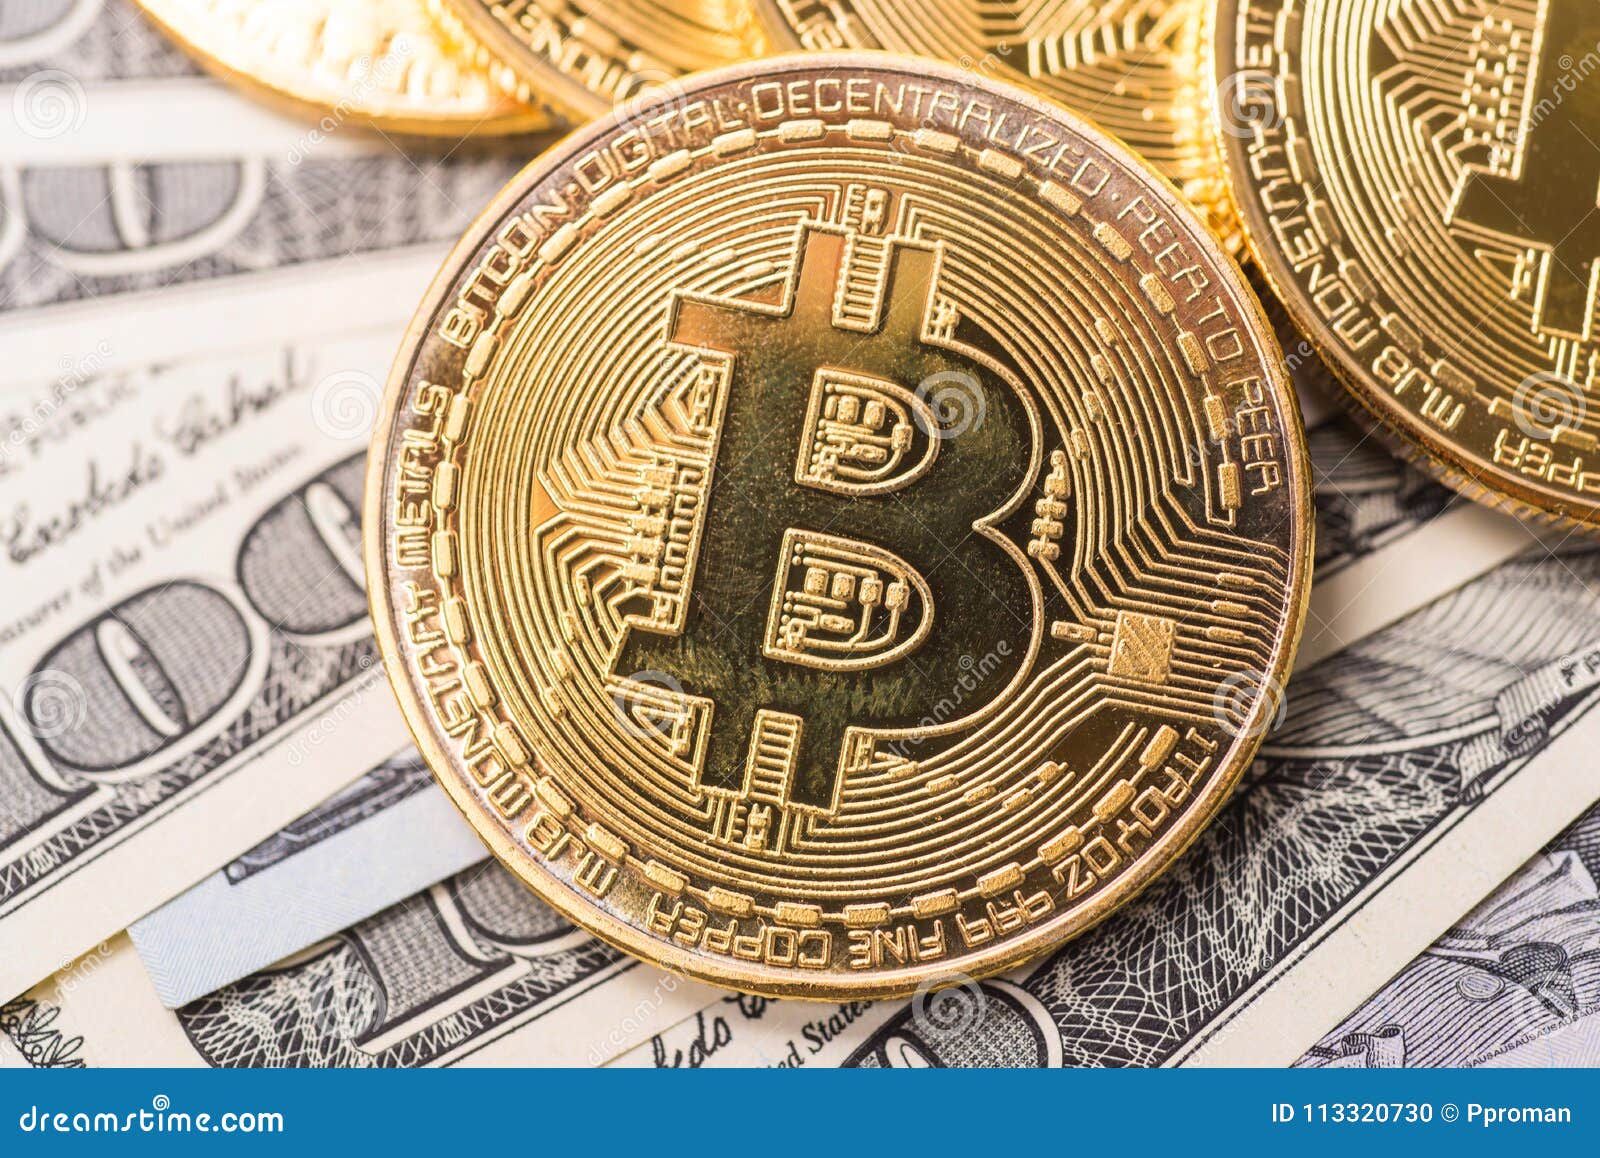 Bitcoin concept coin stock photo. Image of coin, background - 113320730